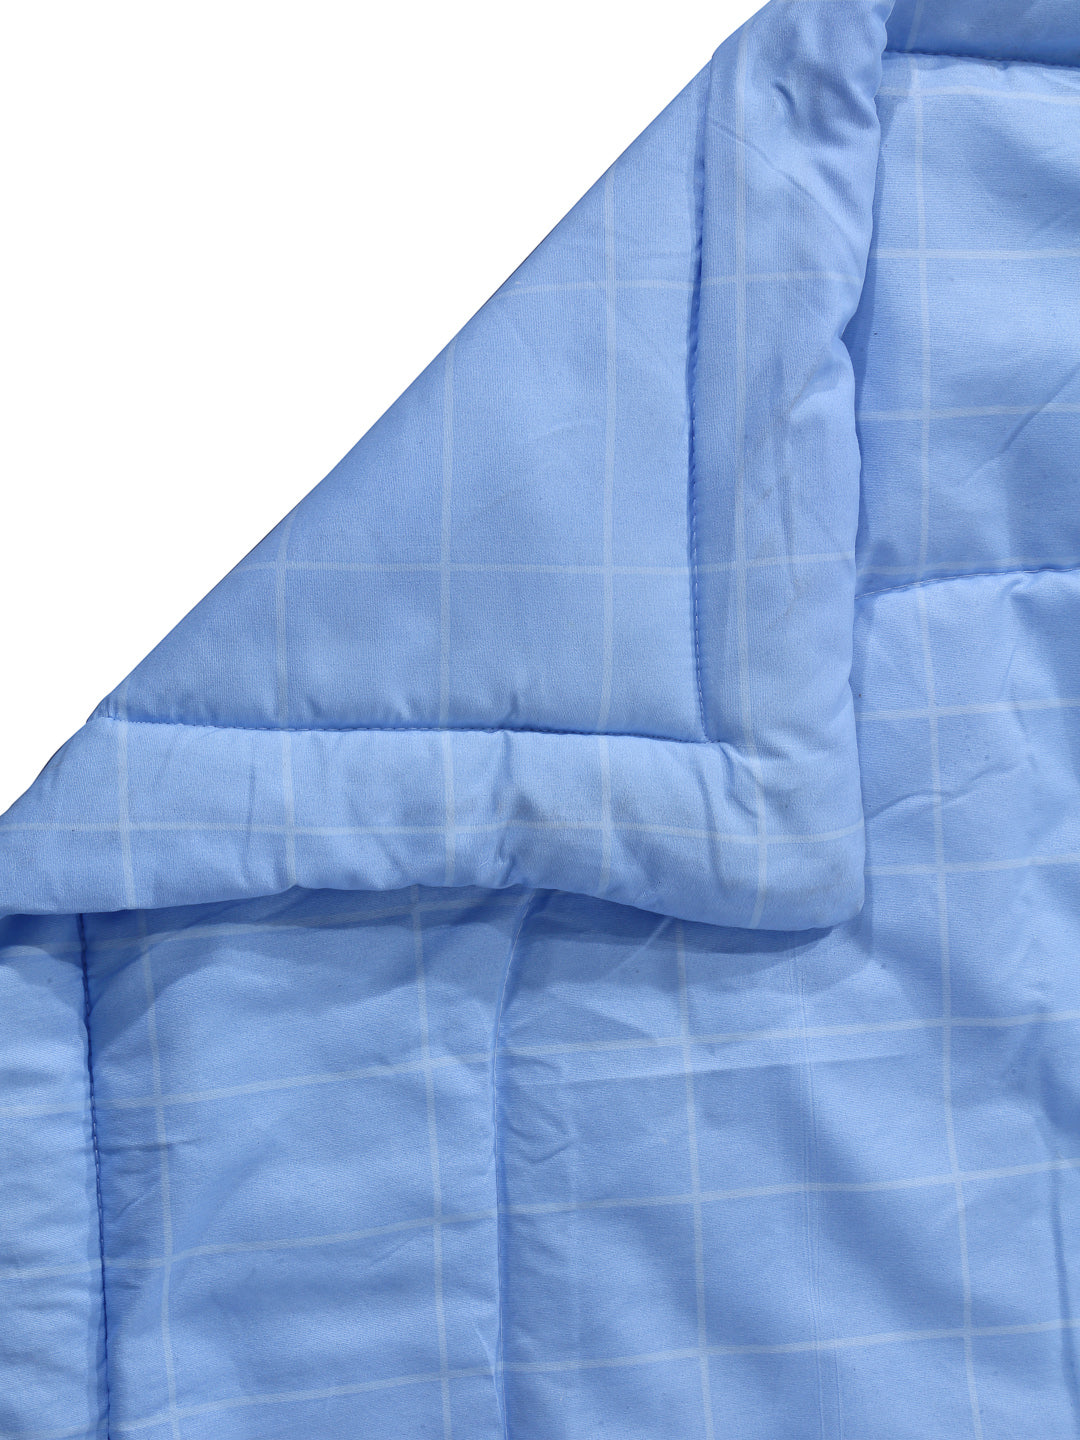 Arrabi Blue Check TC Cotton Blend Double Size Comforter Bedding Set with 2 Pillow Cover